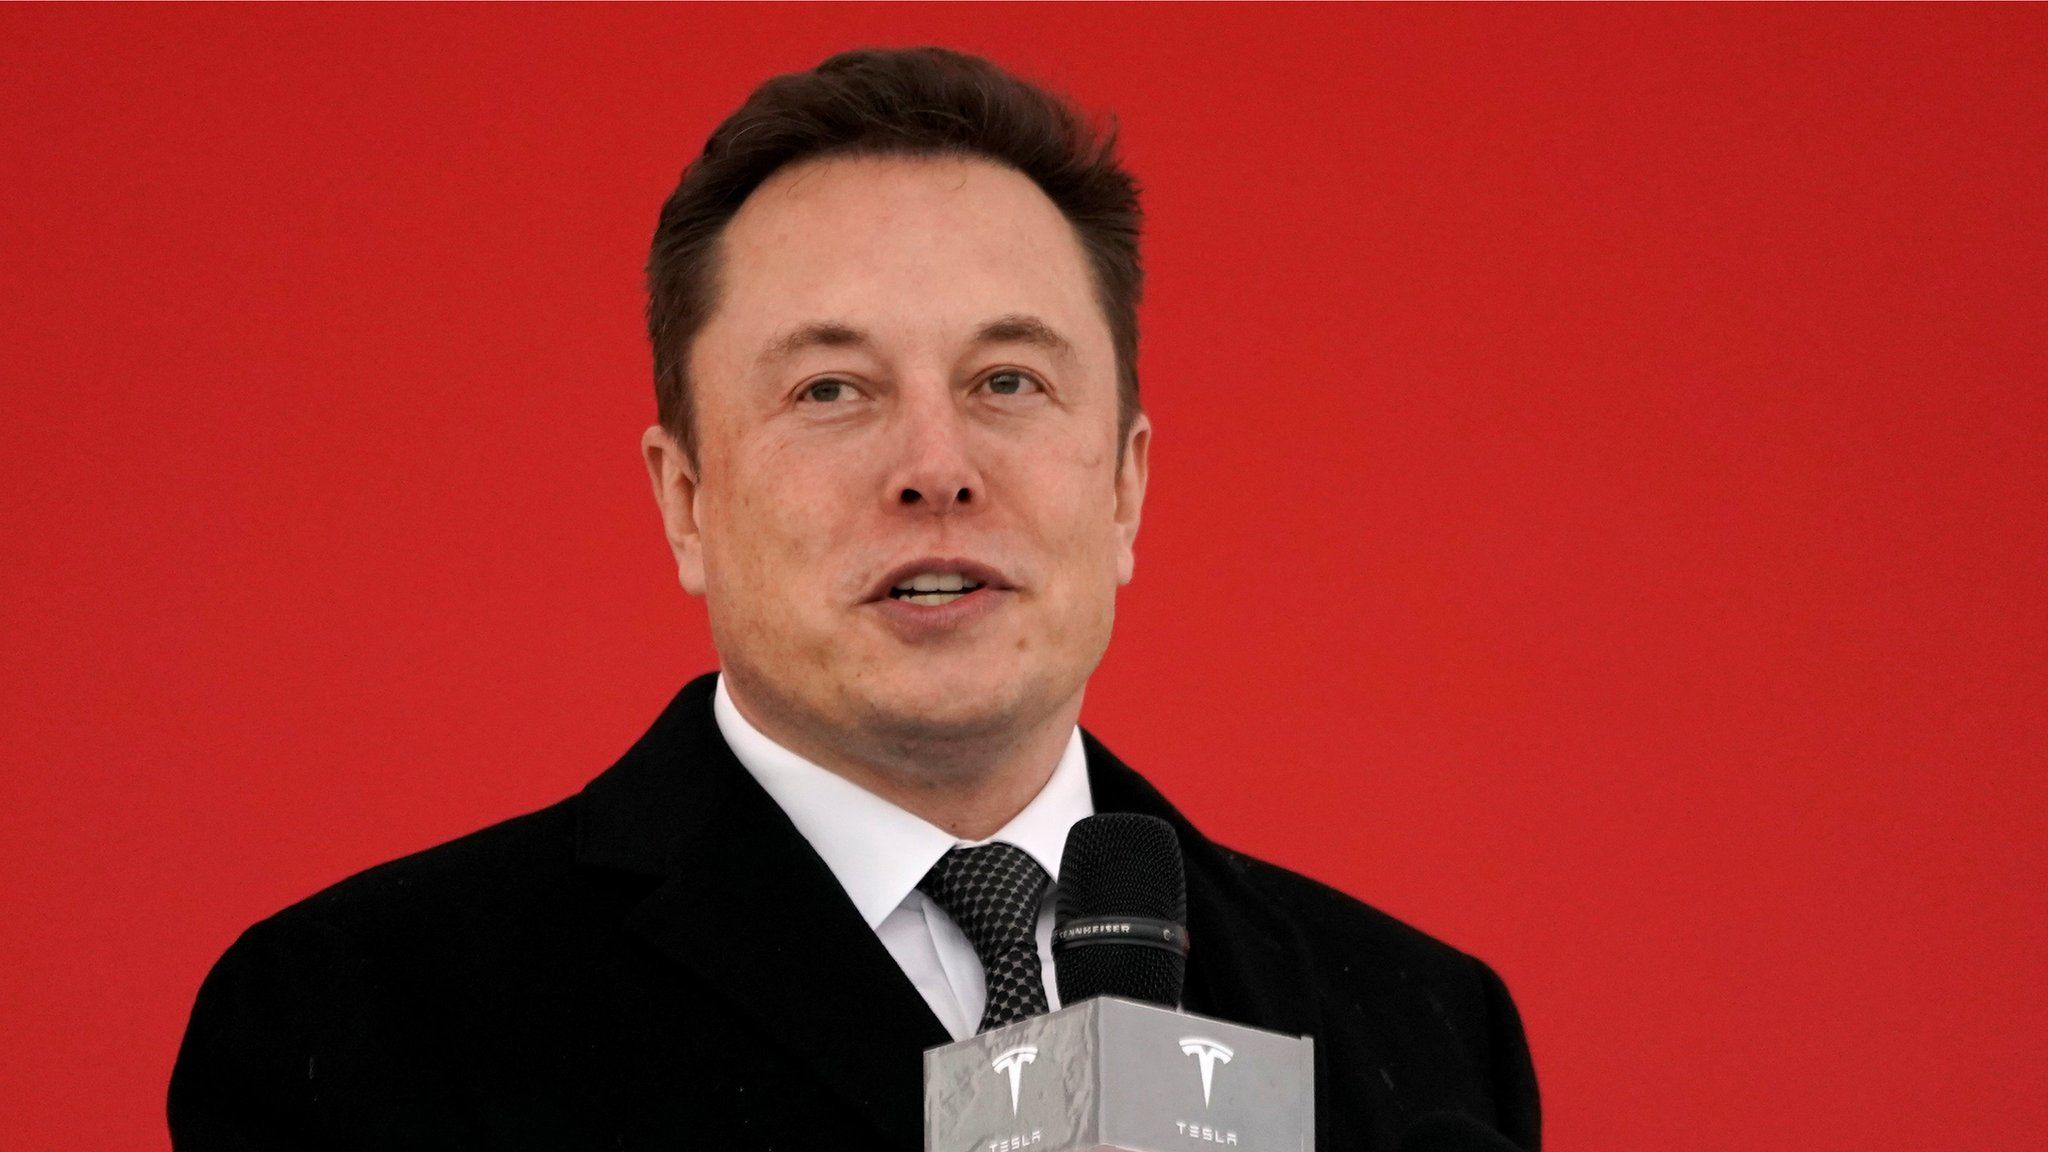 Tesla CEO Elon Musk attends the Tesla Shanghai Gigafactory groundbreaking ceremony in Shanghai, China January 7, 2019.